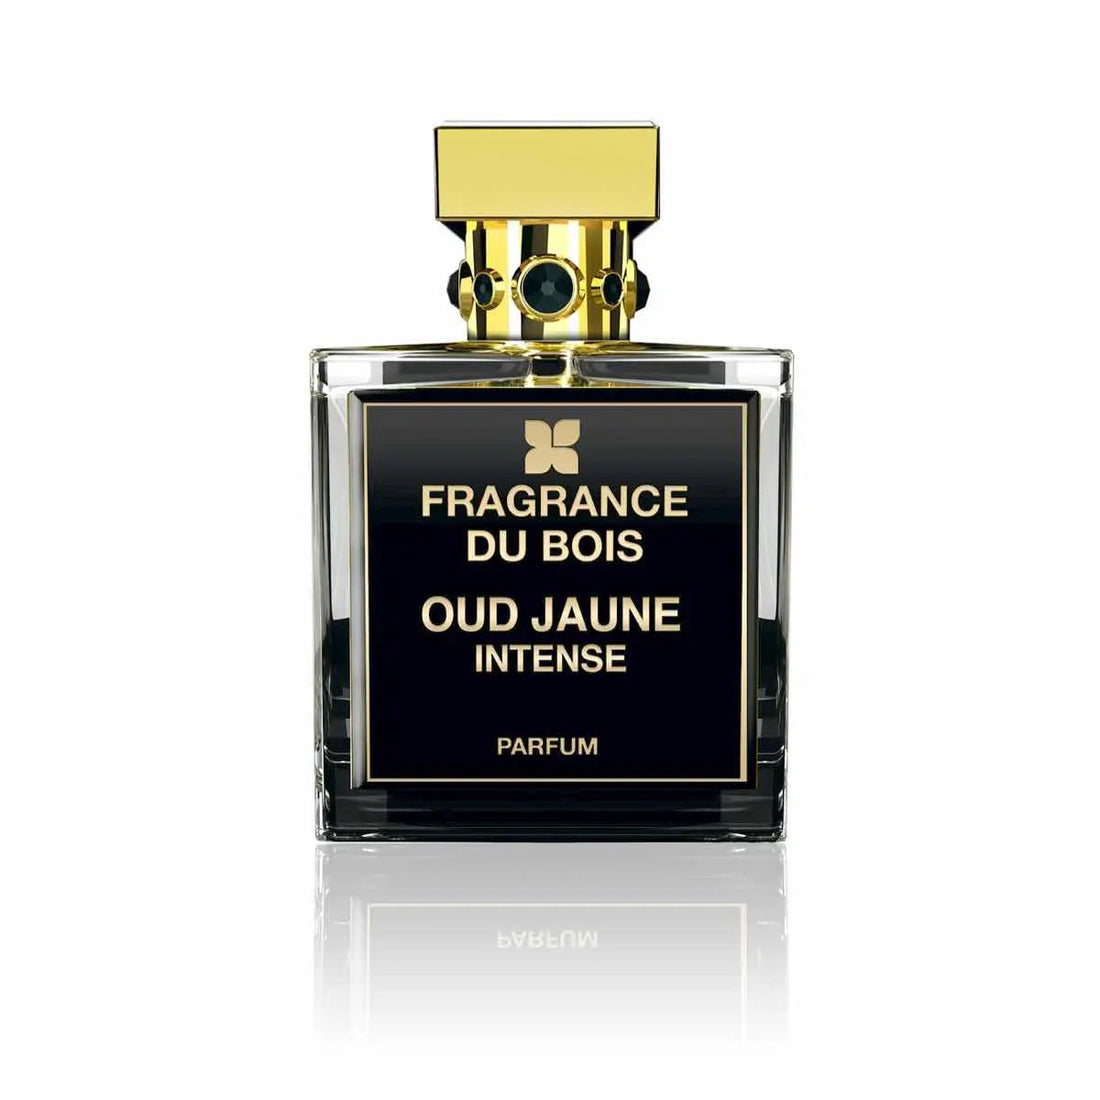 Fragrance du bois Oud Jaune Intense perfume - 100 ml